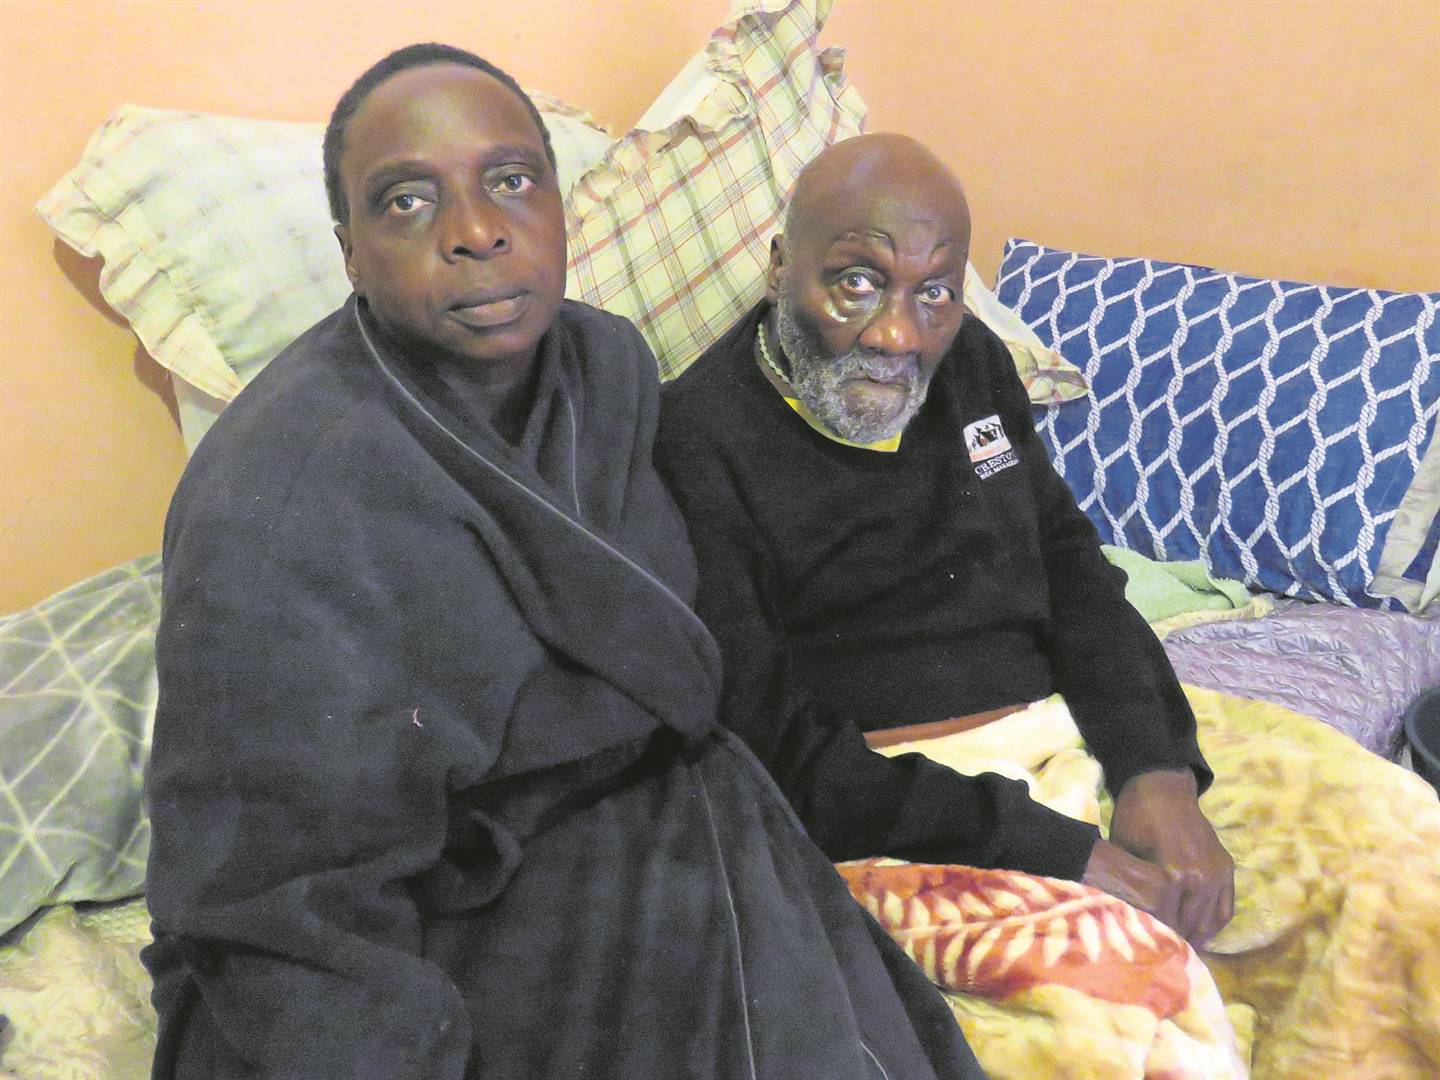 Thuli and her dad, Elson Mhlongo, want answers. Photo by Ntebatse Masipa